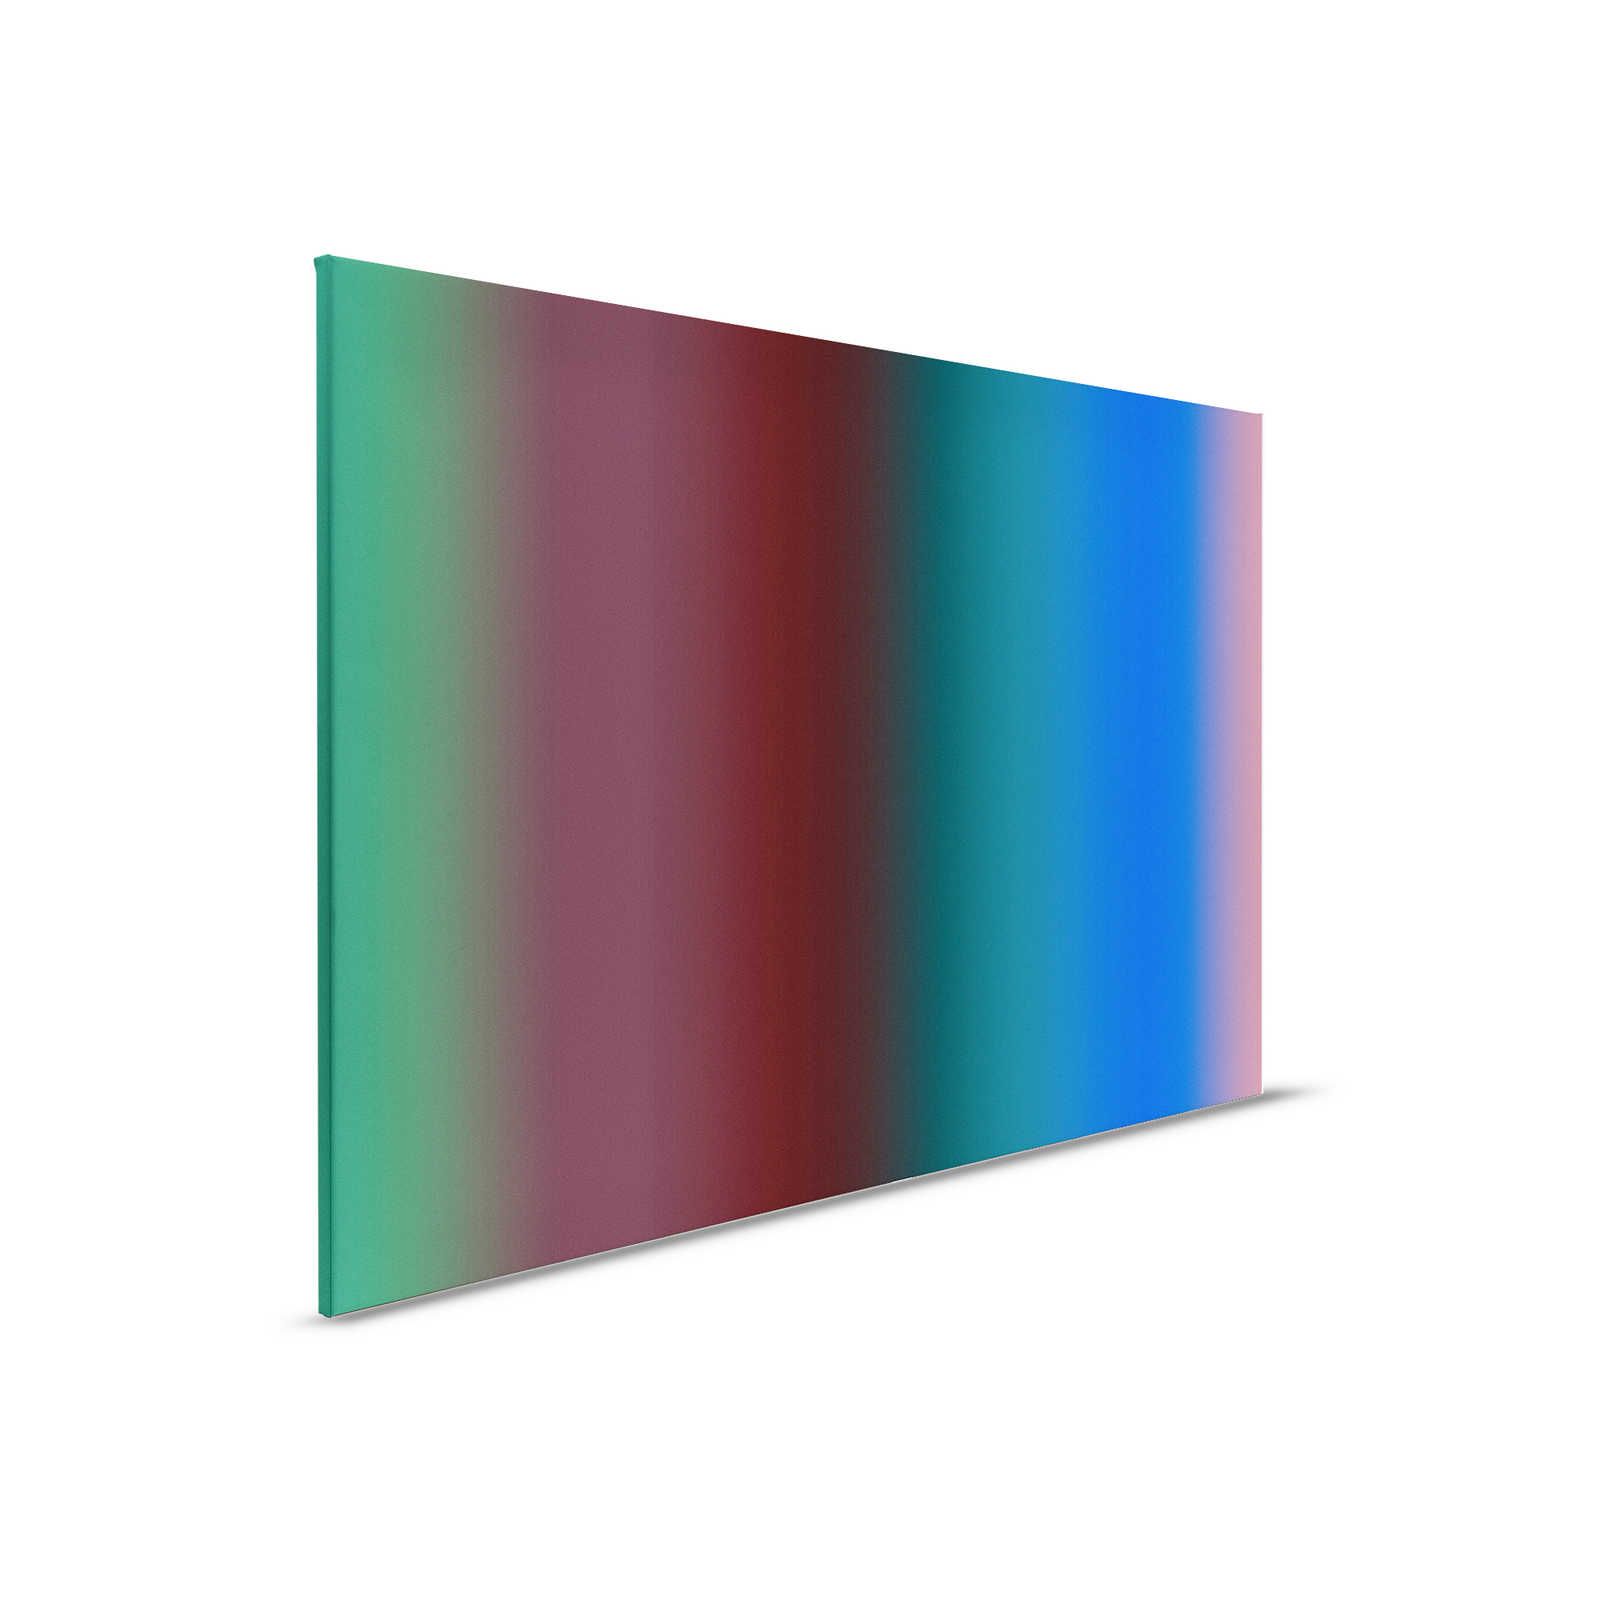         Over the Rainbow 2 - Farbverlauf Leinwandbild buntes Streifendesign – 0,90 m x 0,60 m
    